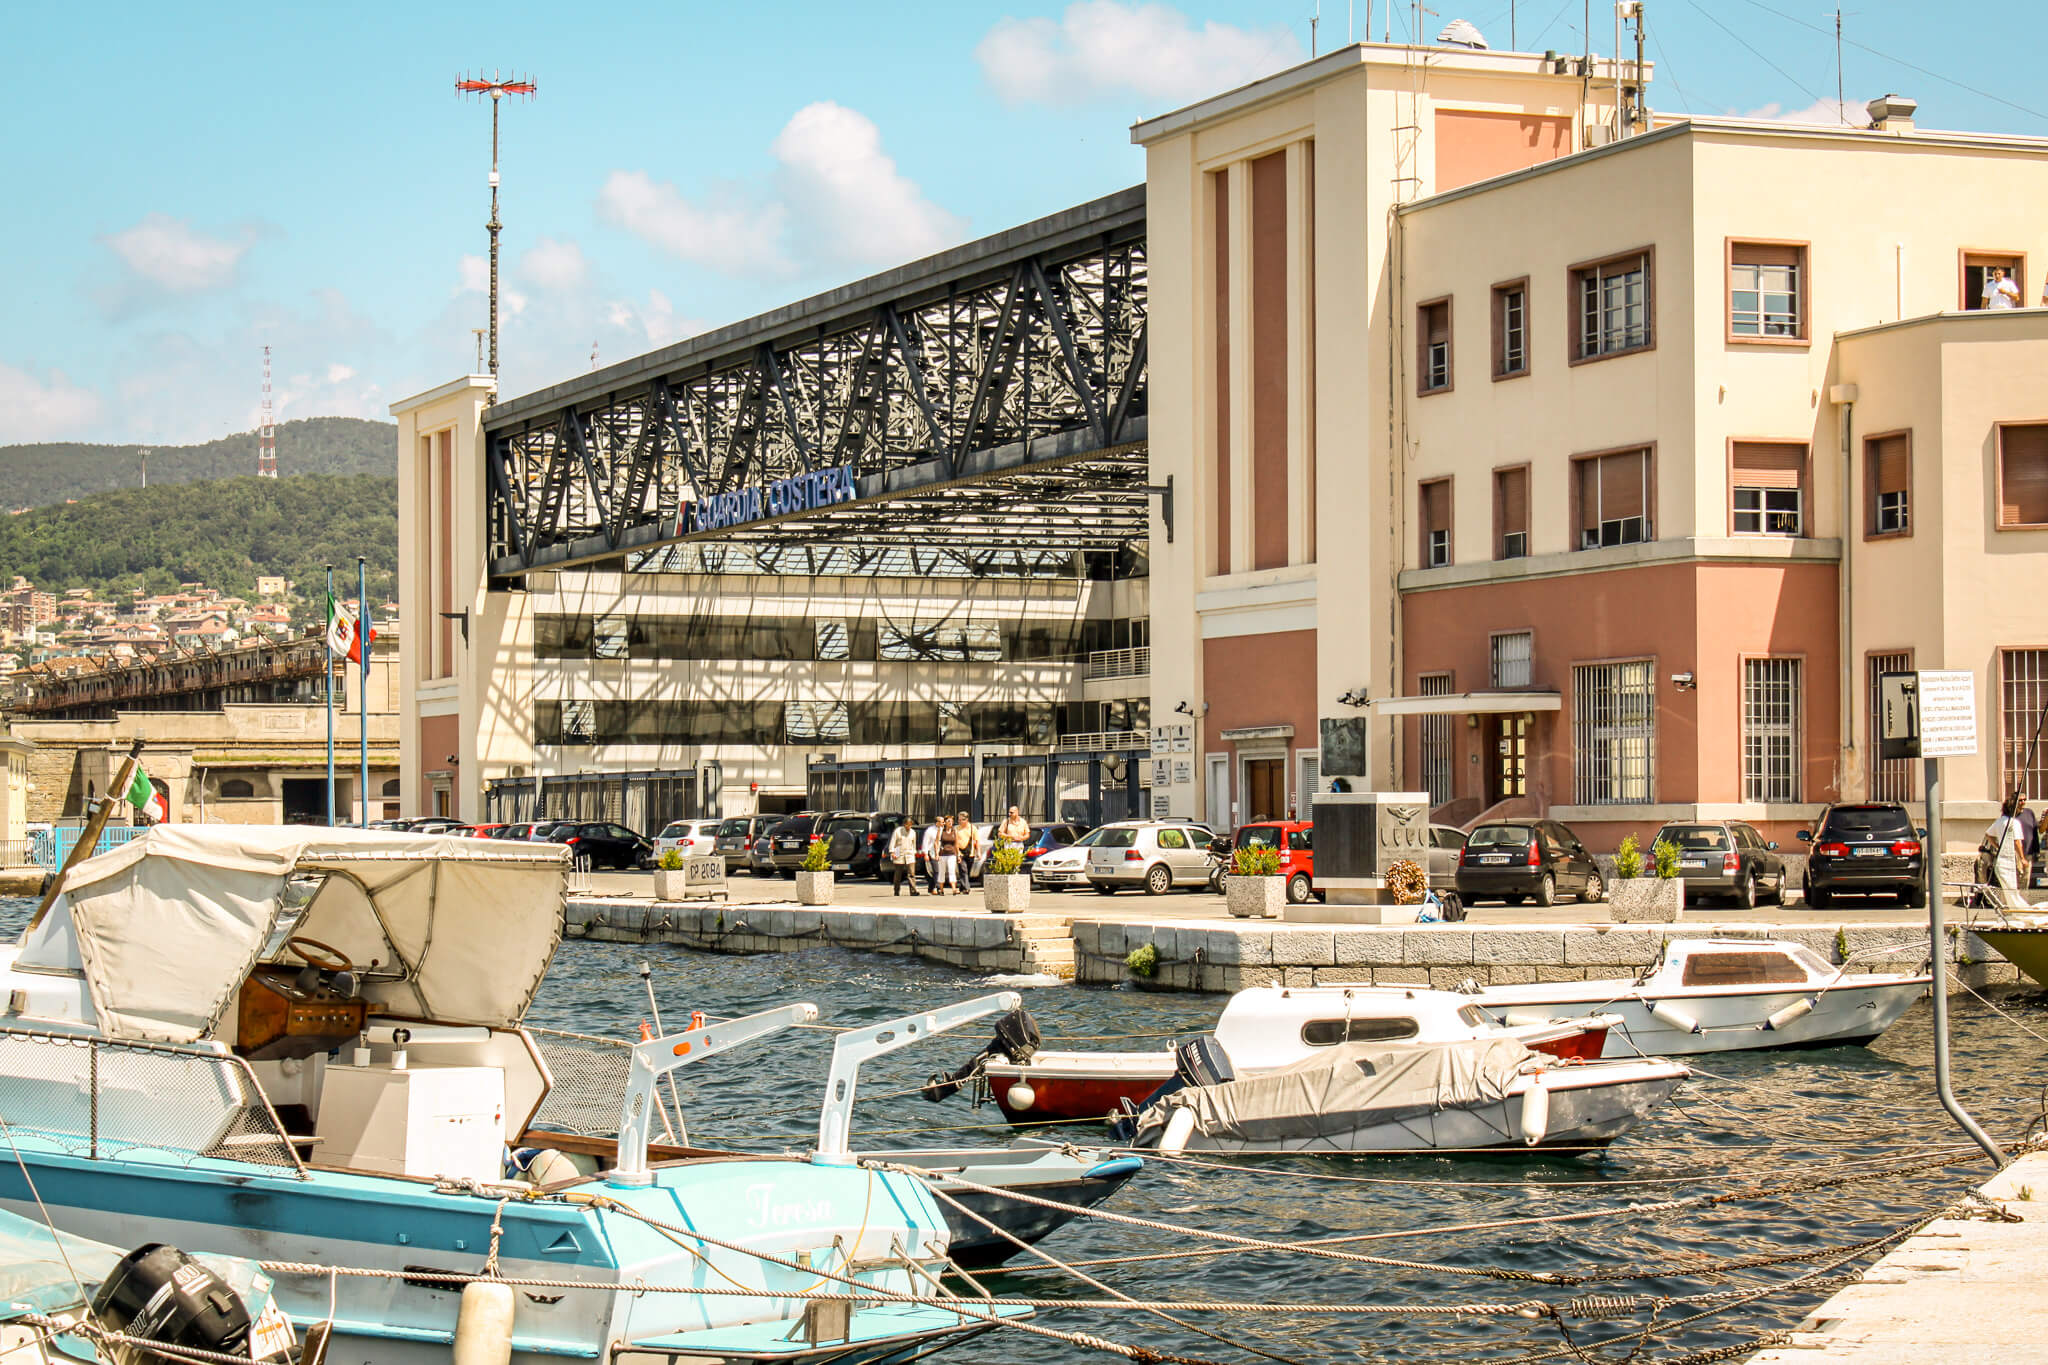 The coast guard building in Trieste